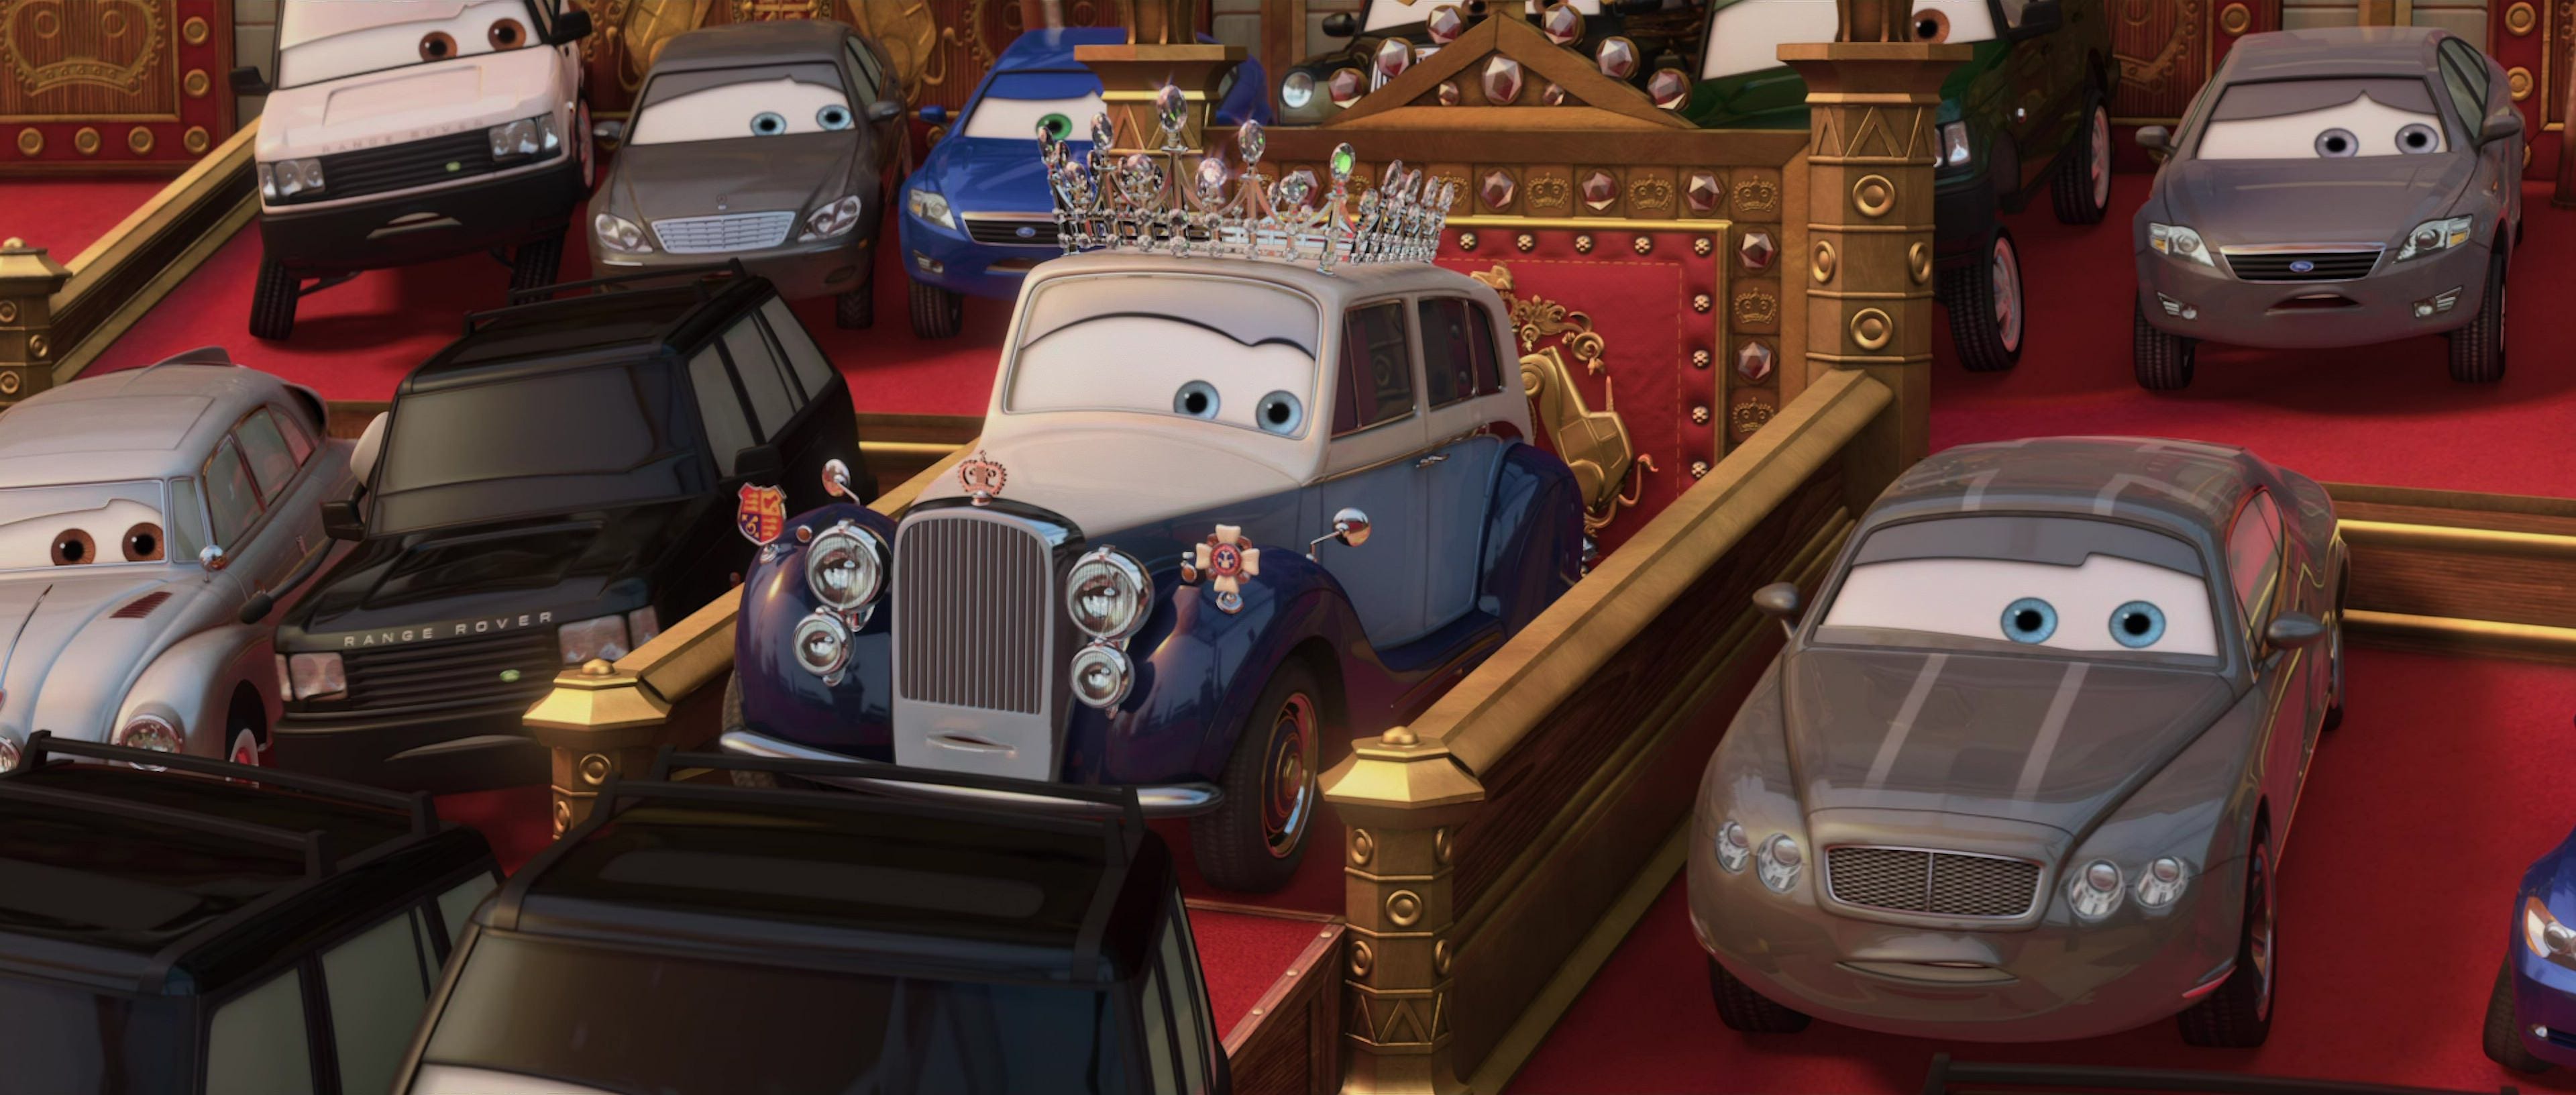 Pixar's John Lasseter: 'Cars 2 is a spy movie', Pixar